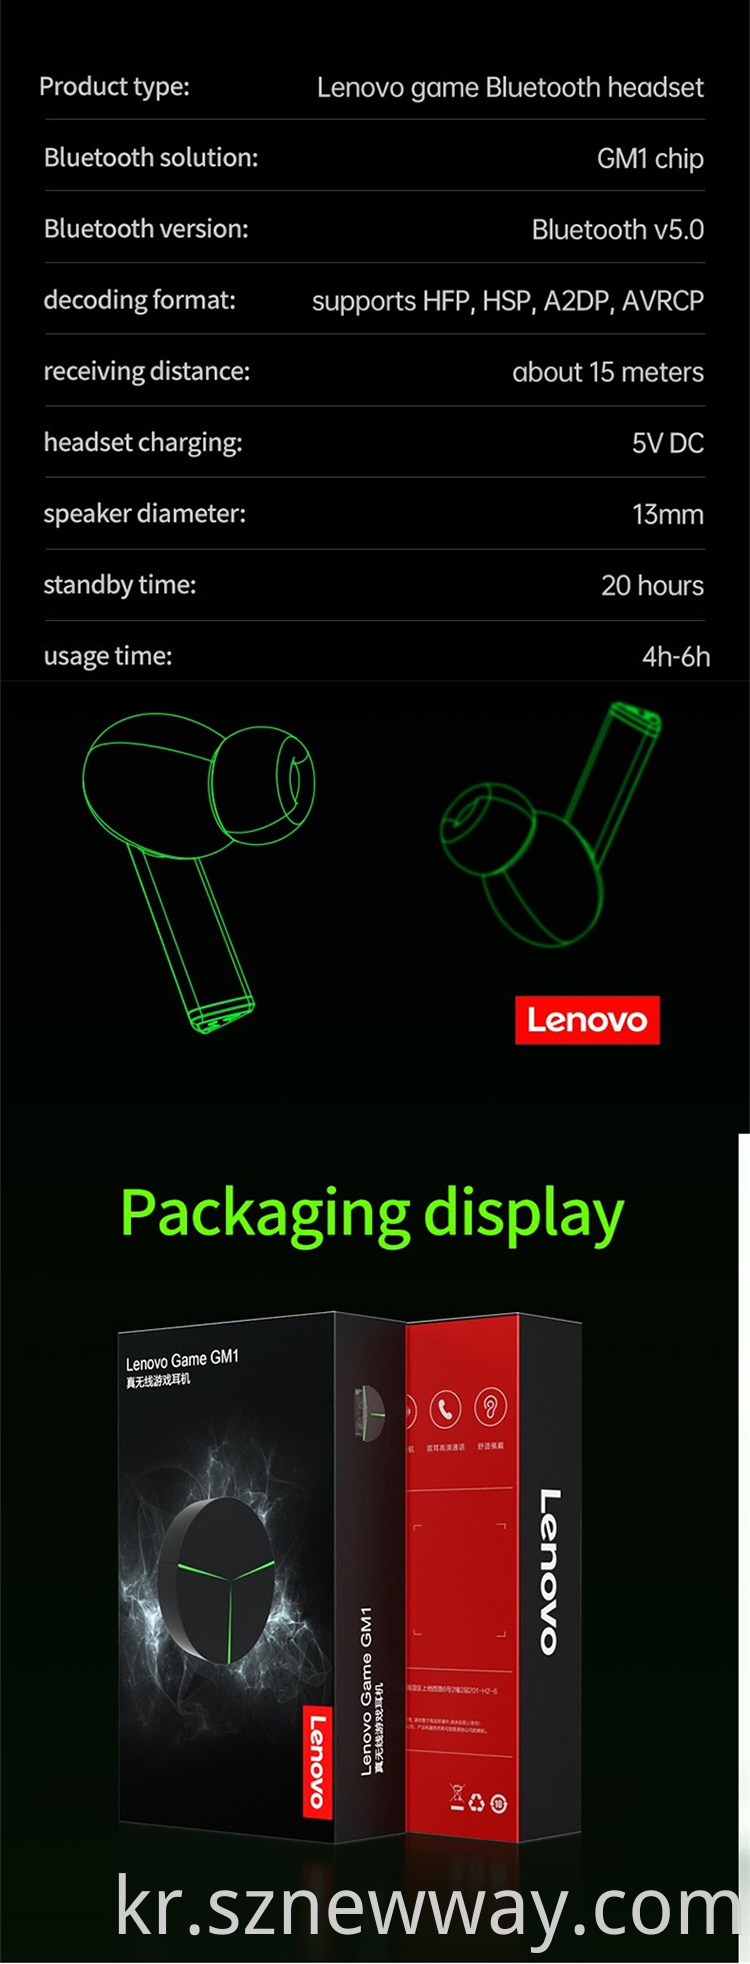 Lenovo Gm1 Headphone